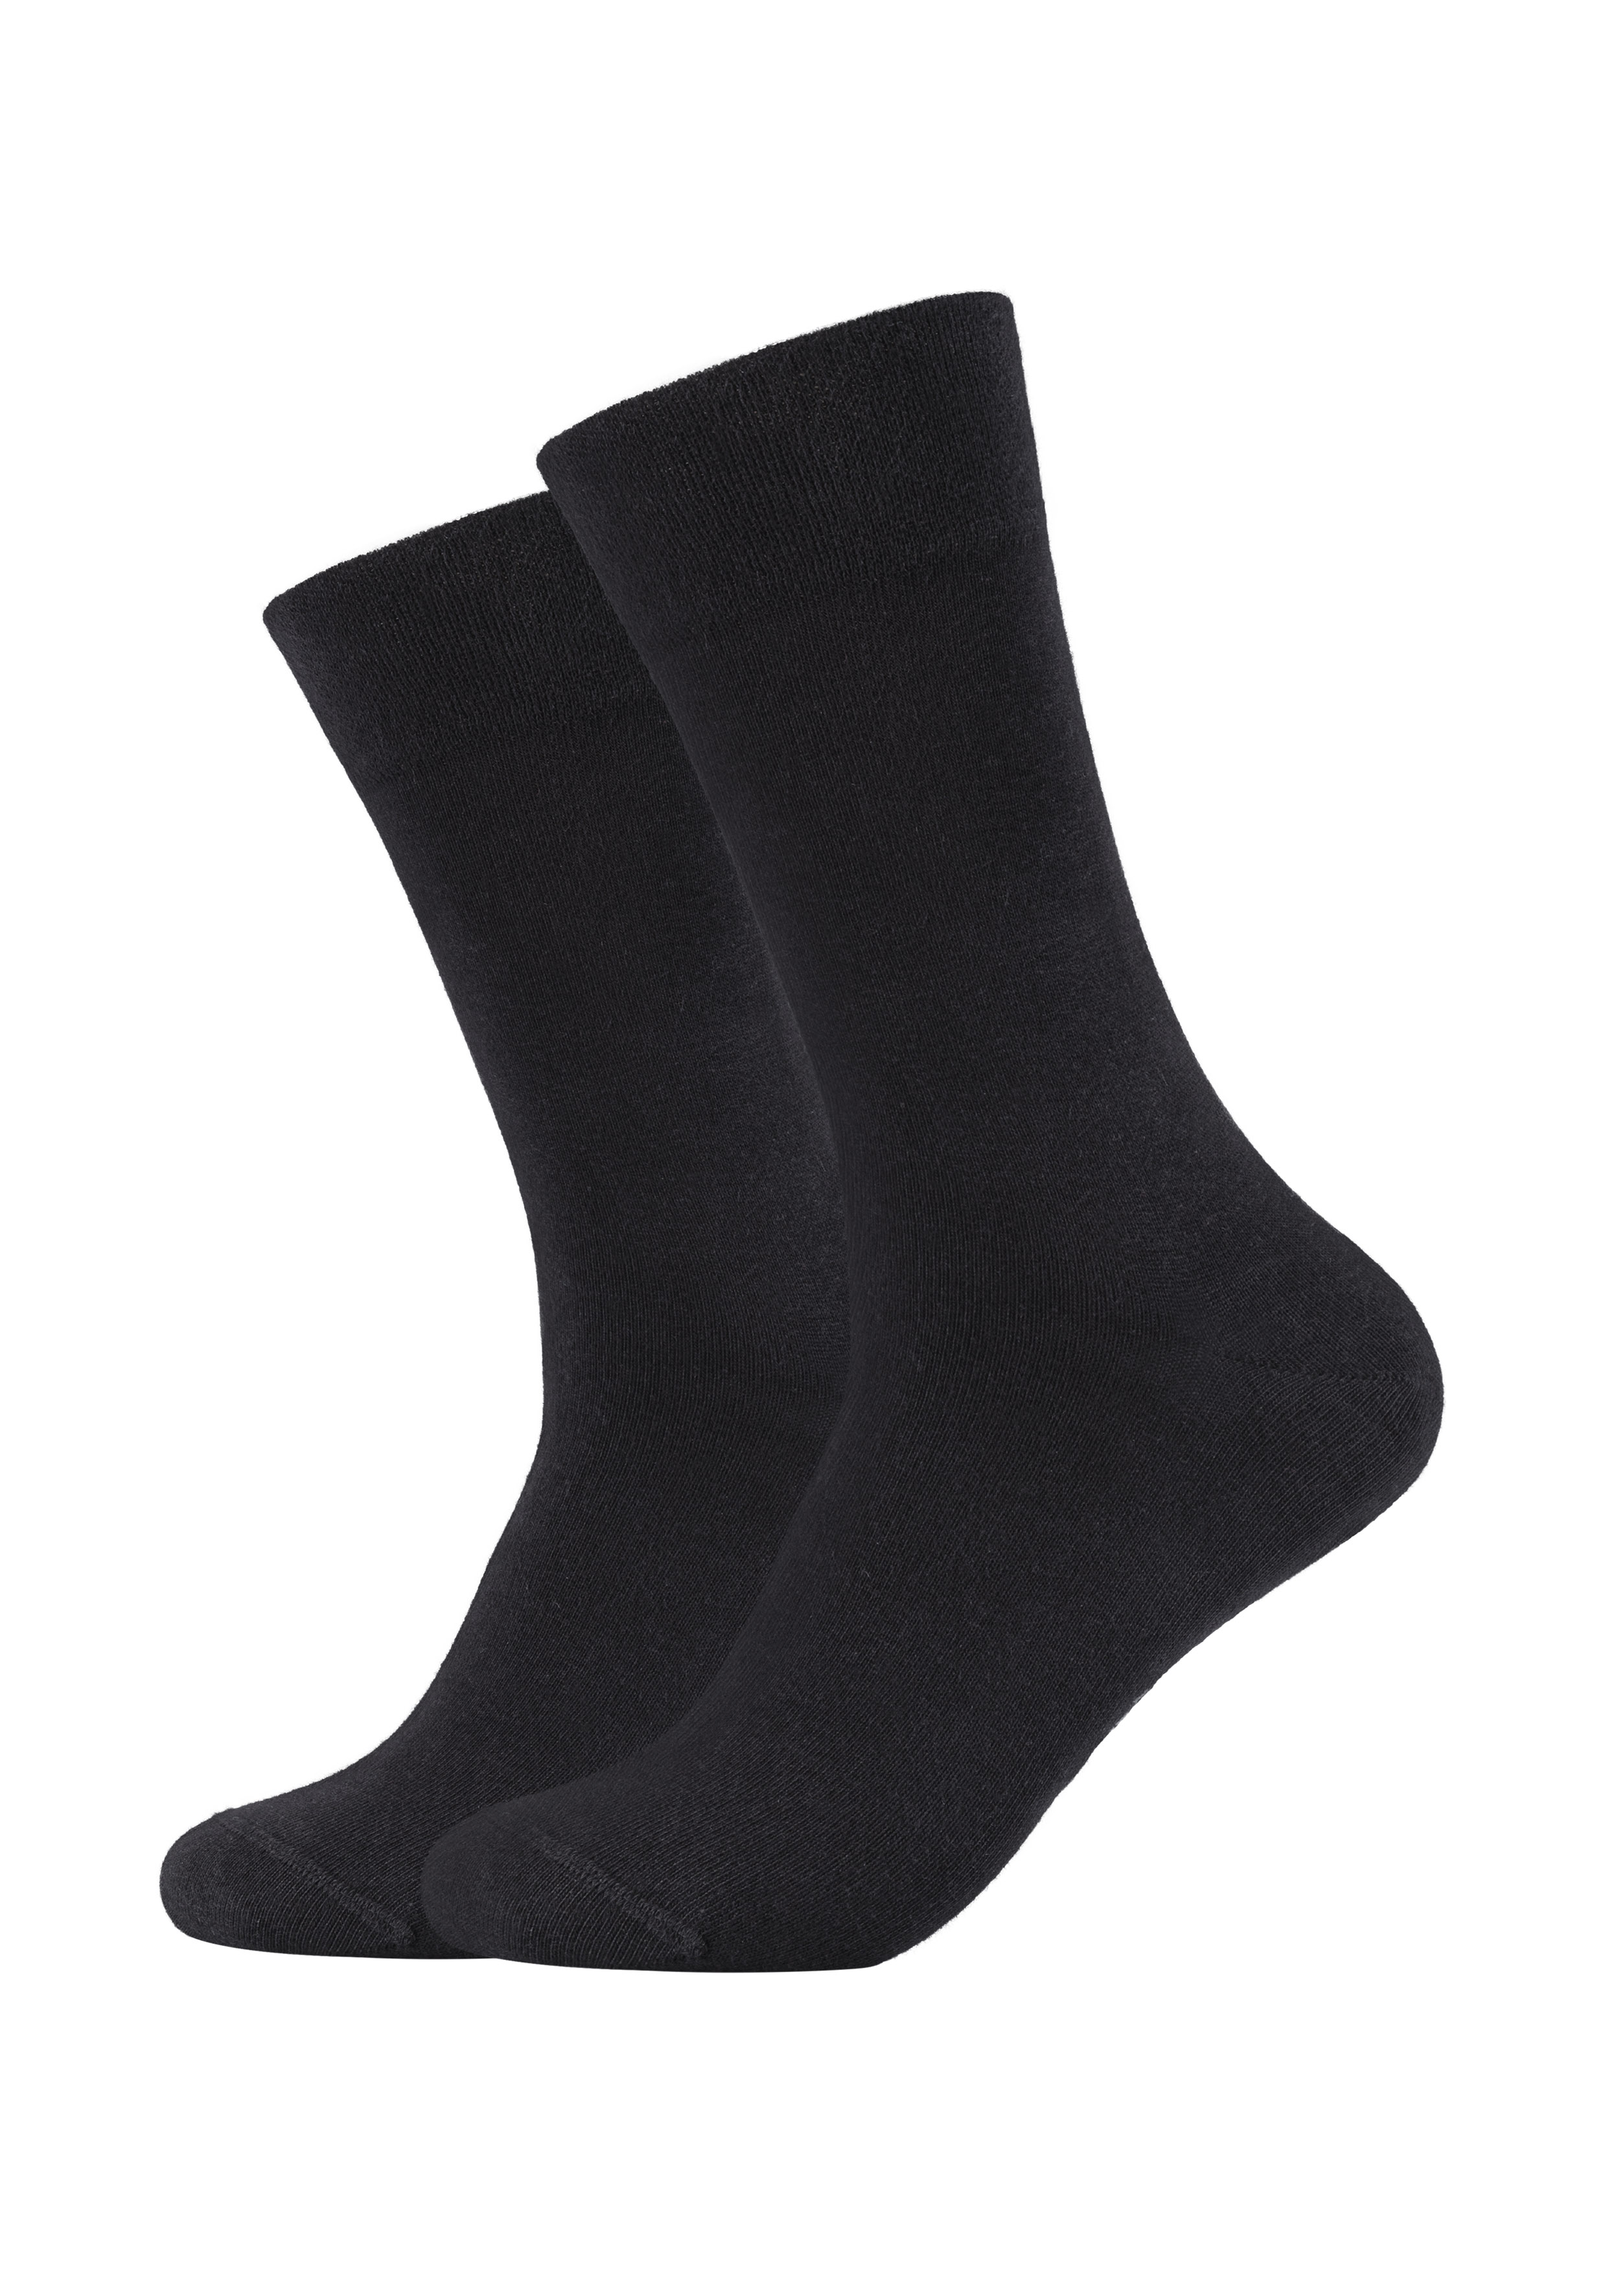 Herren-Socke aus 97% premium organic cotton  2er Pack